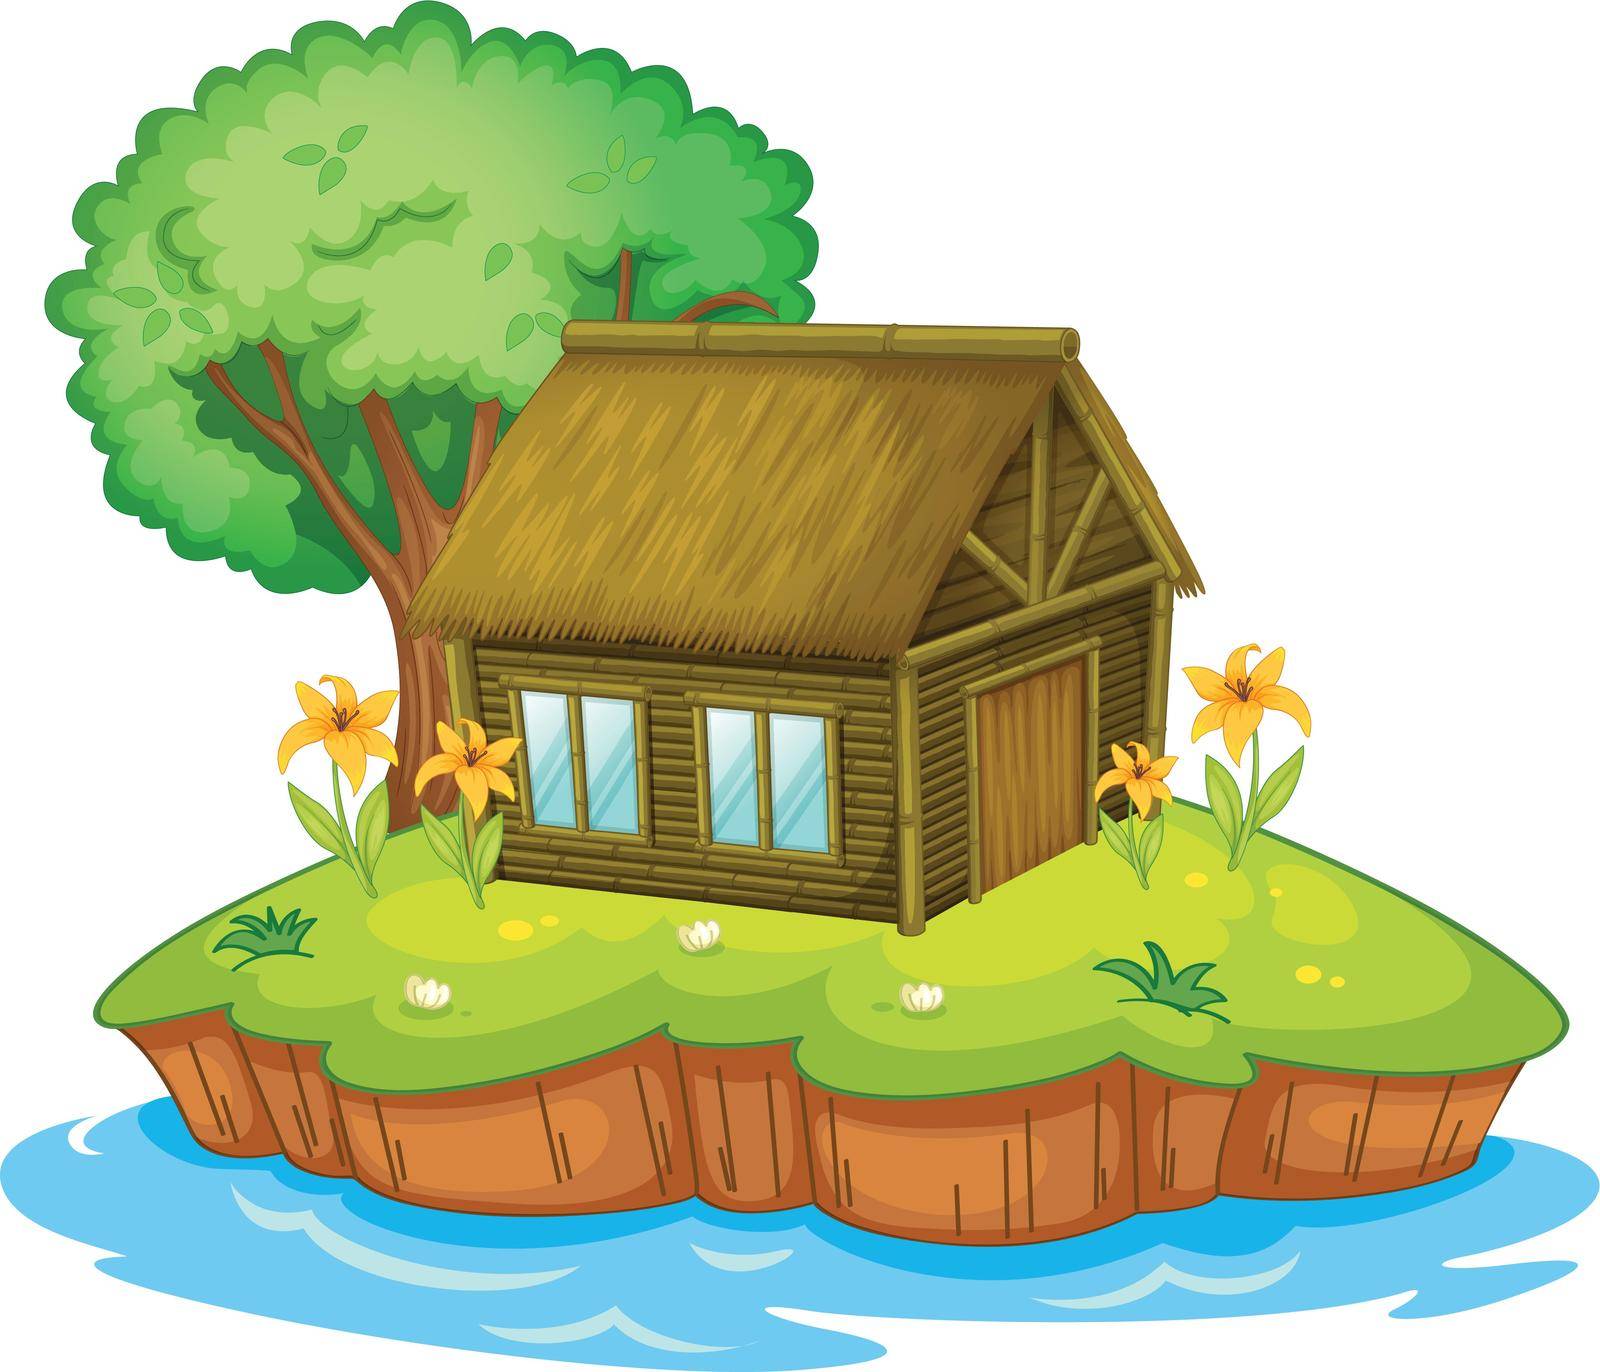 Illustration of a hut on an island